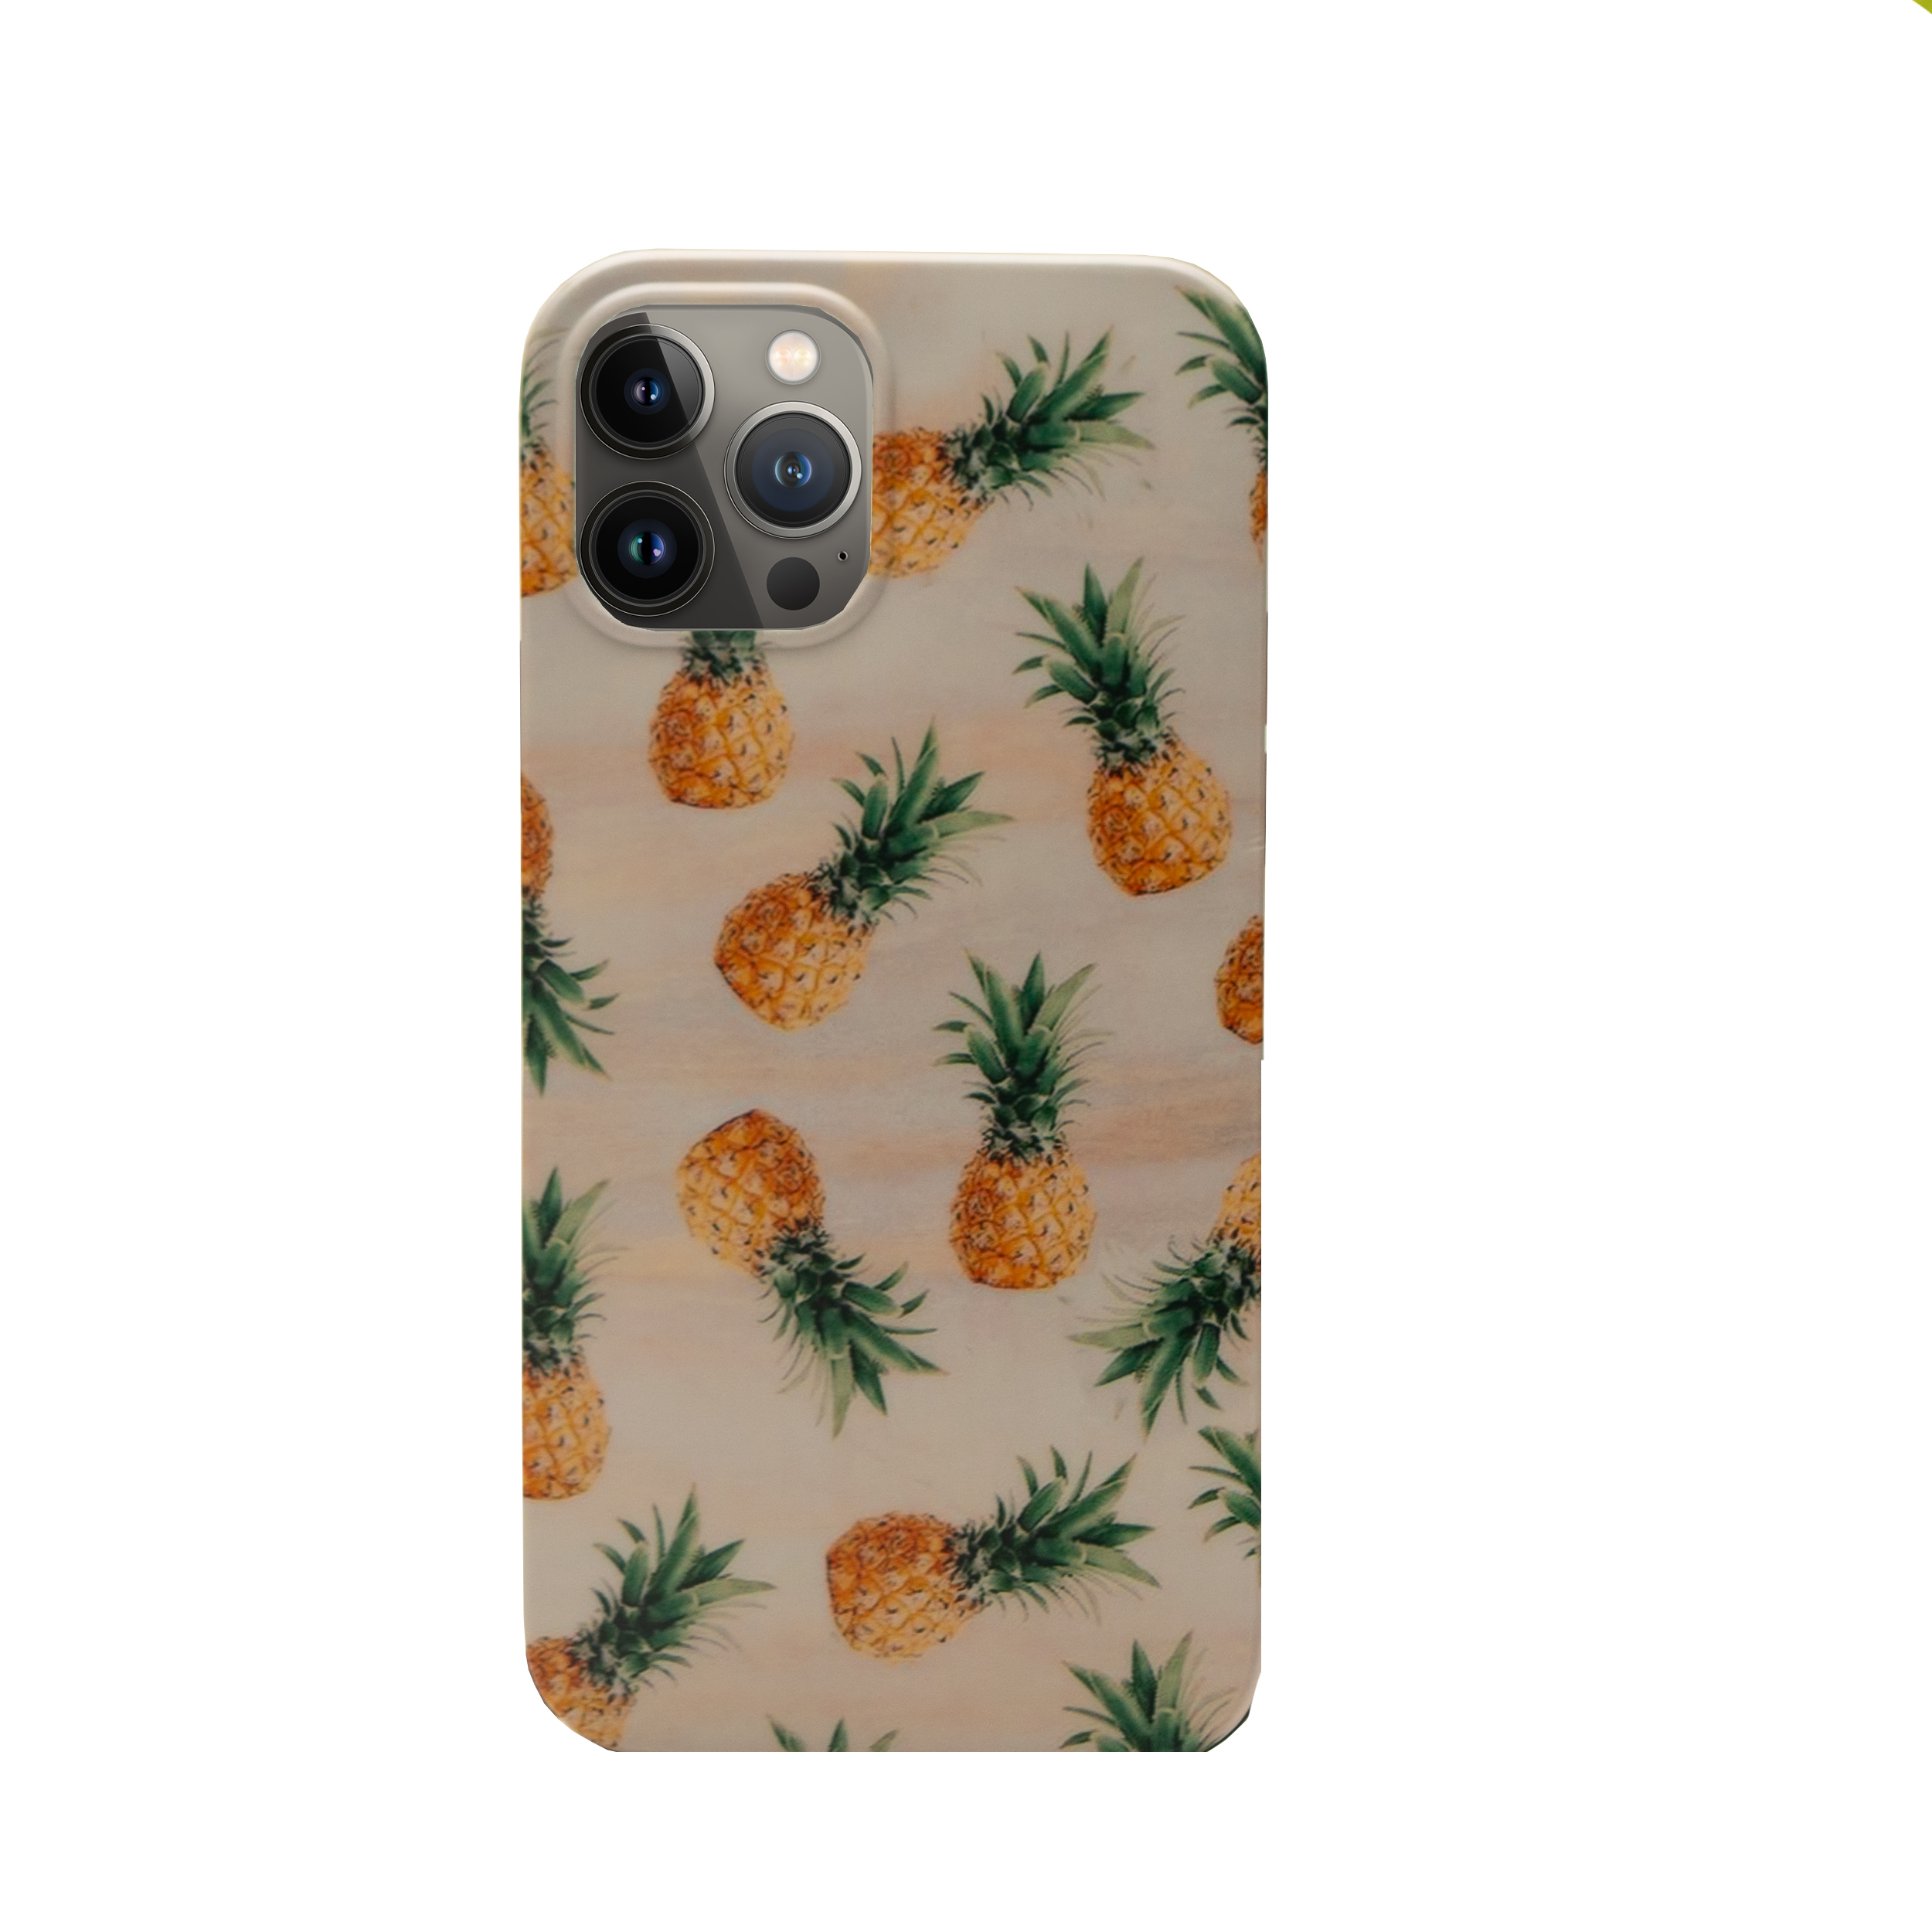 کاور مدل pineapple مناسب برای گوشی موبایل اپل Iphone 11 Pro